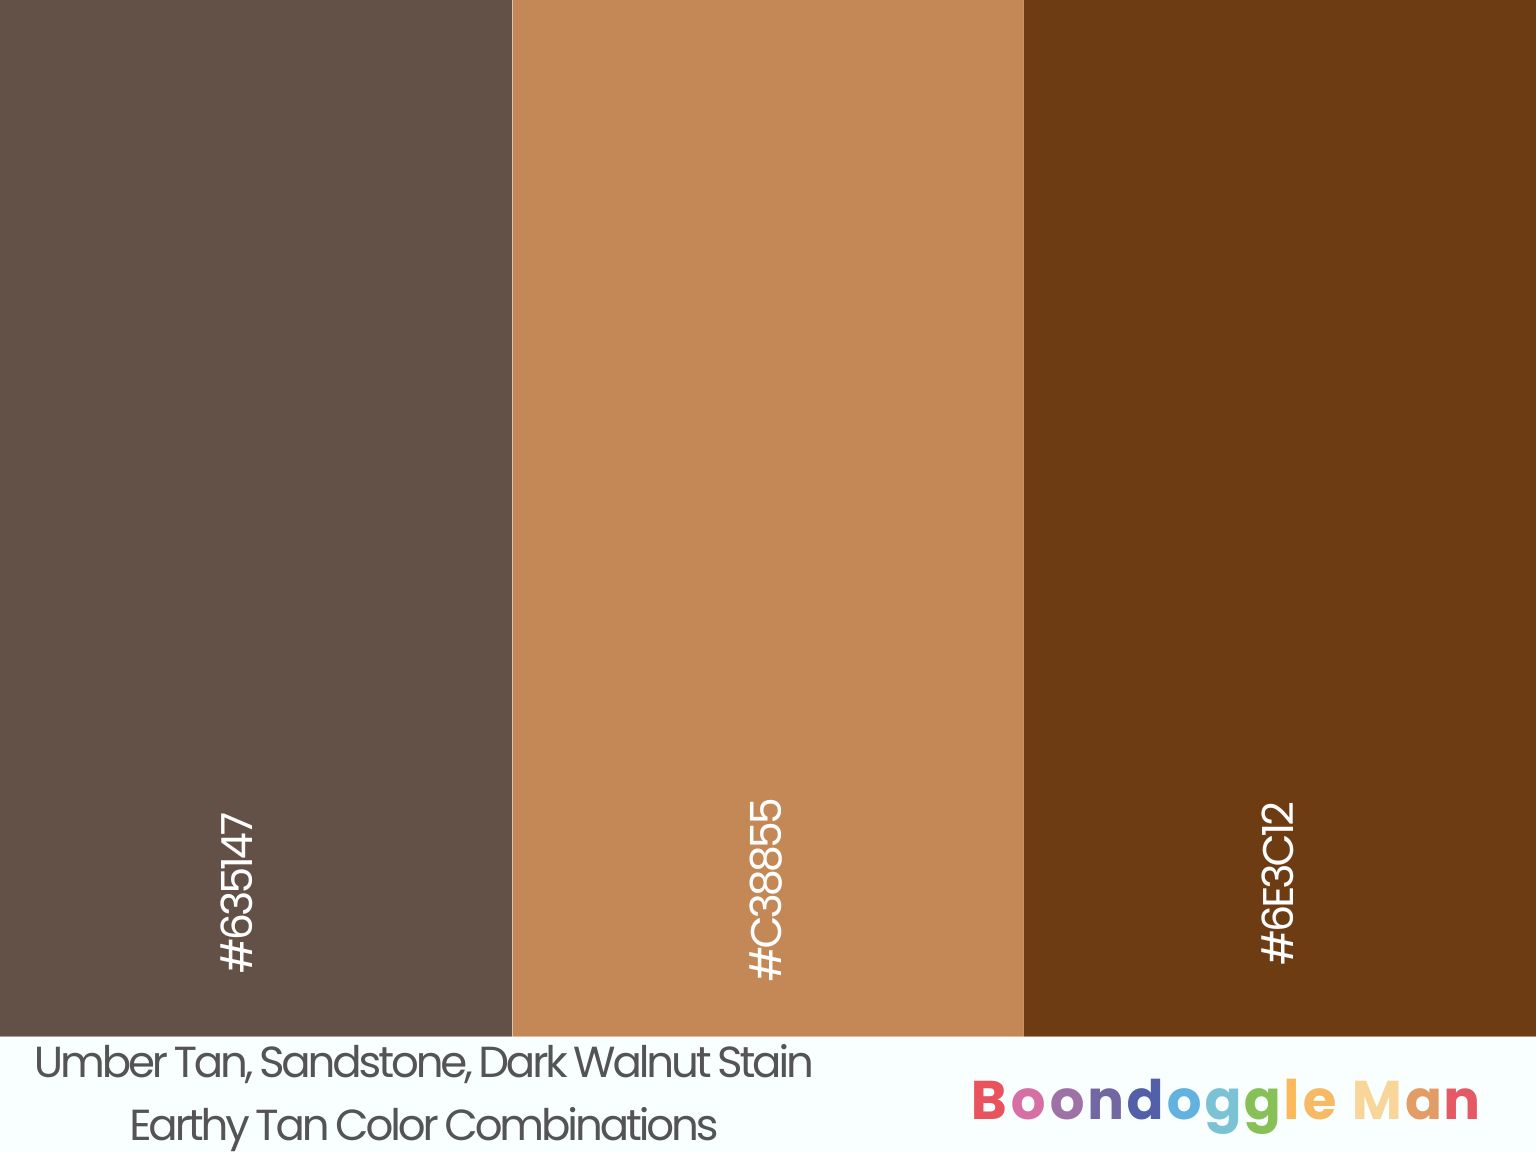 Umber Tan, Sandstone, Dark Walnut Stain